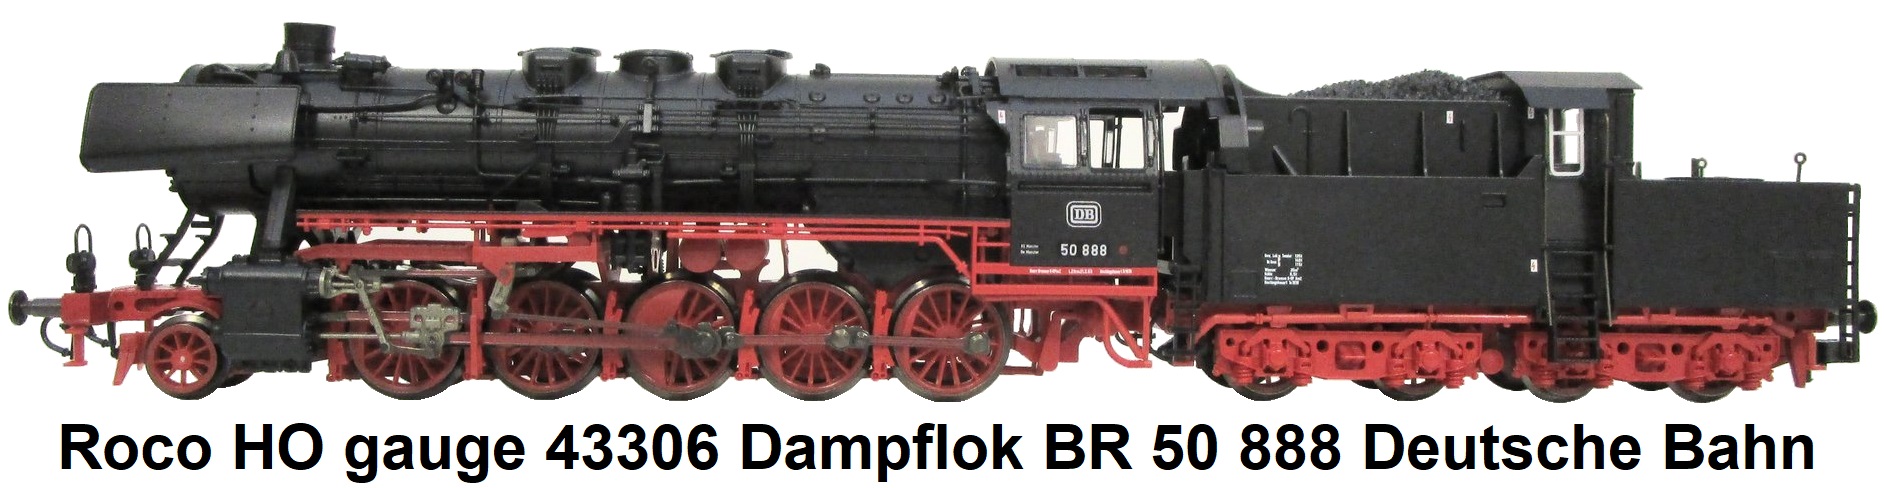 Roco HO gauge 43306 Dampflok BR 50 888 DB OVP